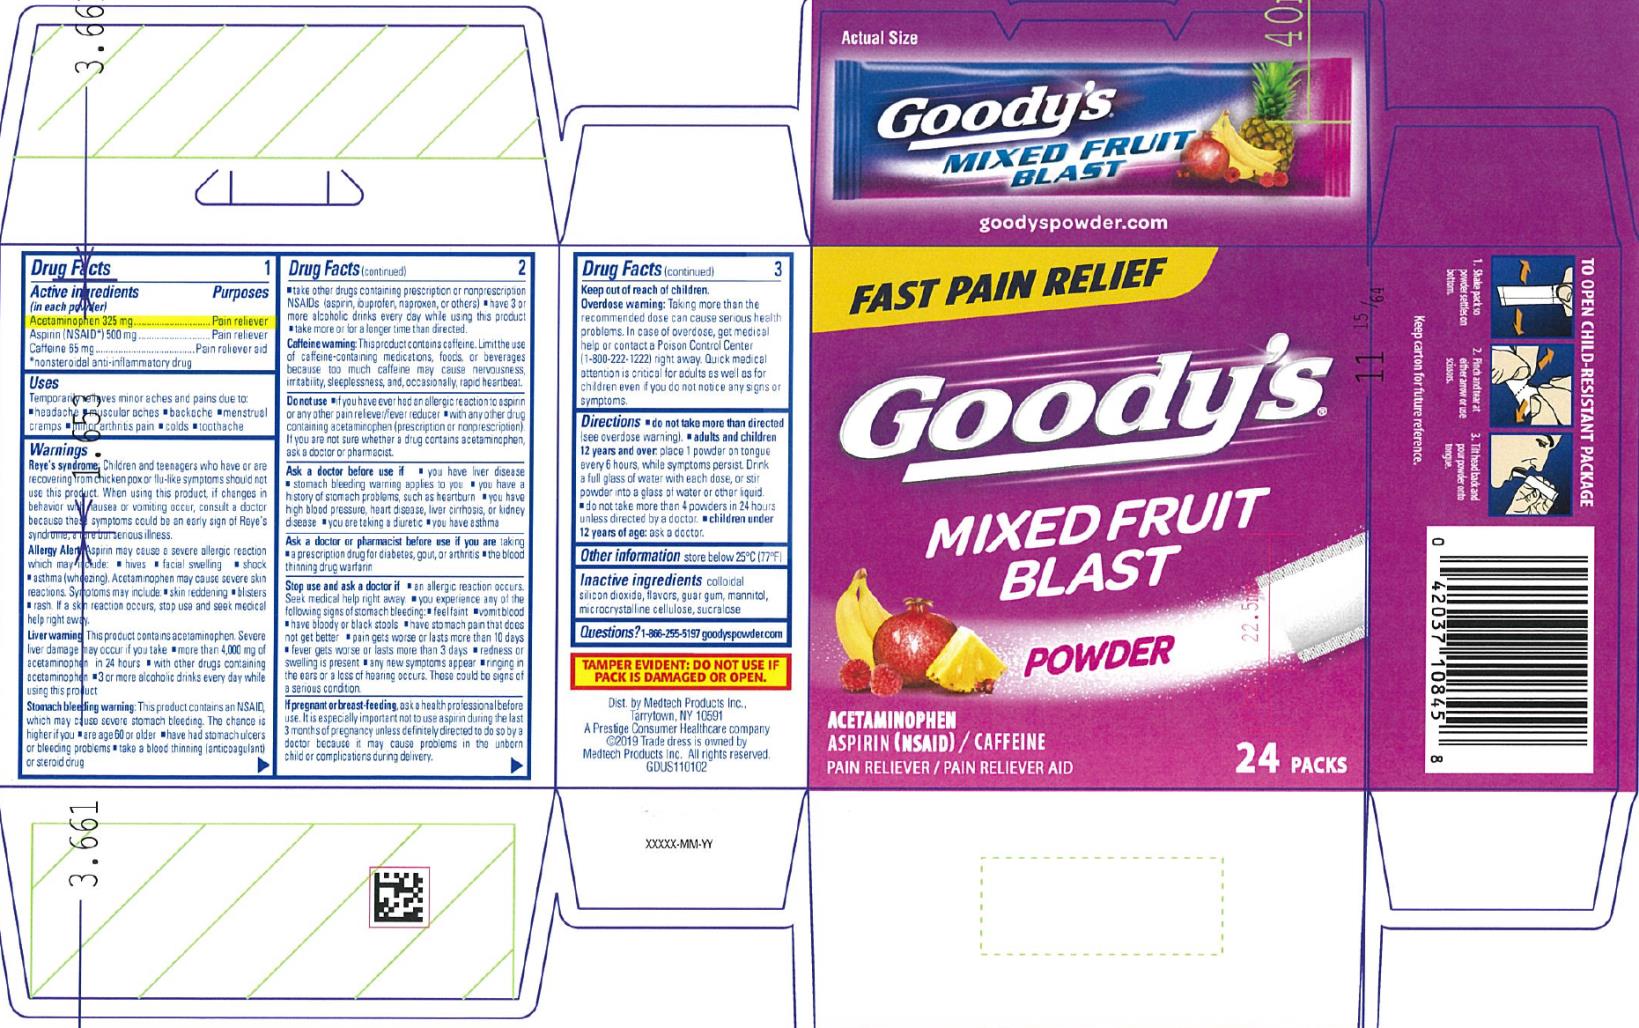 PRINCIPAL DISPLAY PANEL
Goody’s Mixed Fruit Blast
Acetaminophen
Aspirin (NSAID)/ Caffeine
24 sealed powder packs
